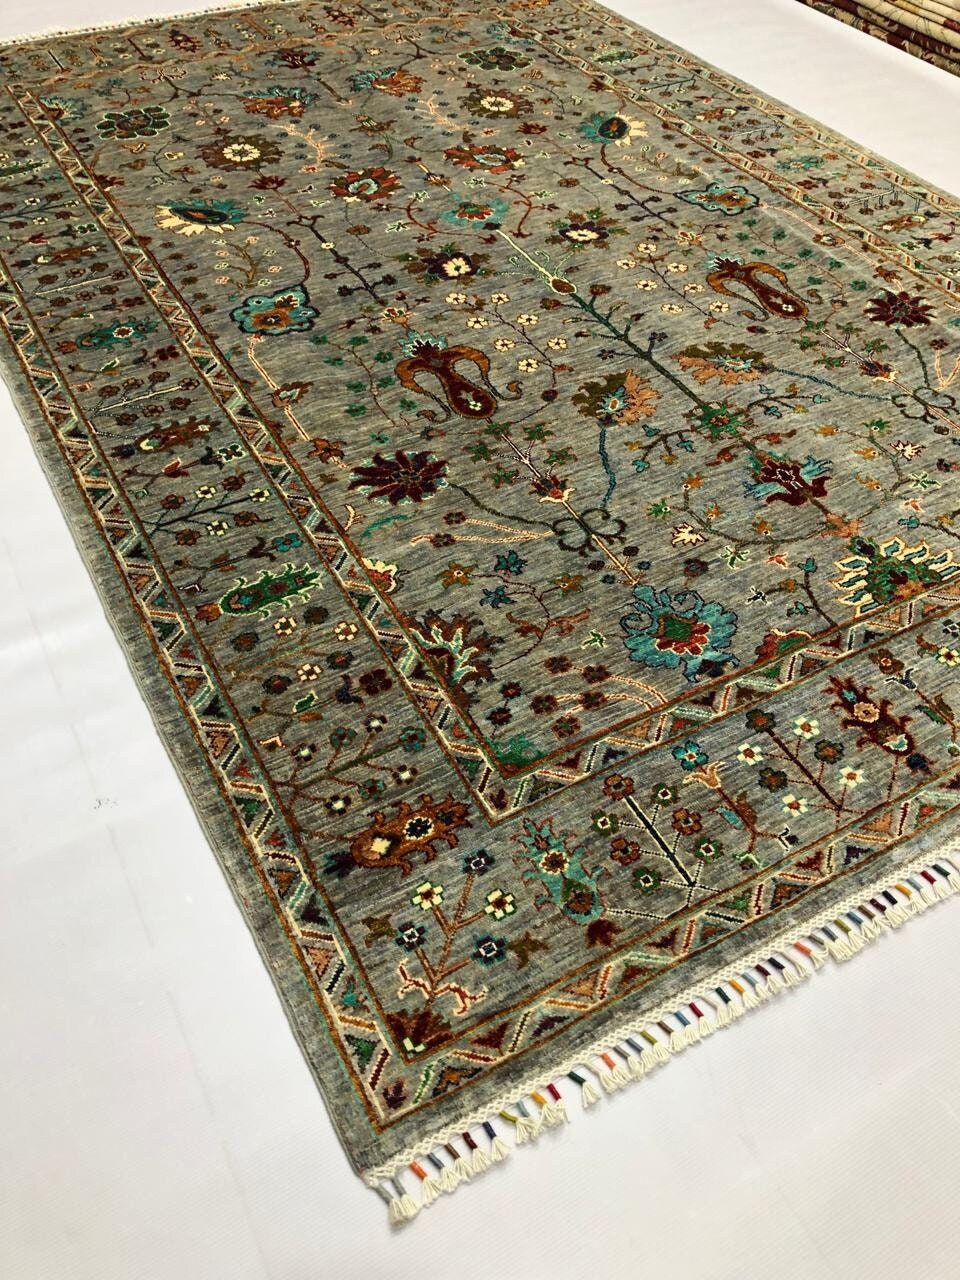 10x7 Feet Top Quality Mamluk Handmade Afghan Rug, Persian Designed from Tribal Ghazni | Living room Carpet, Green Neon Colored